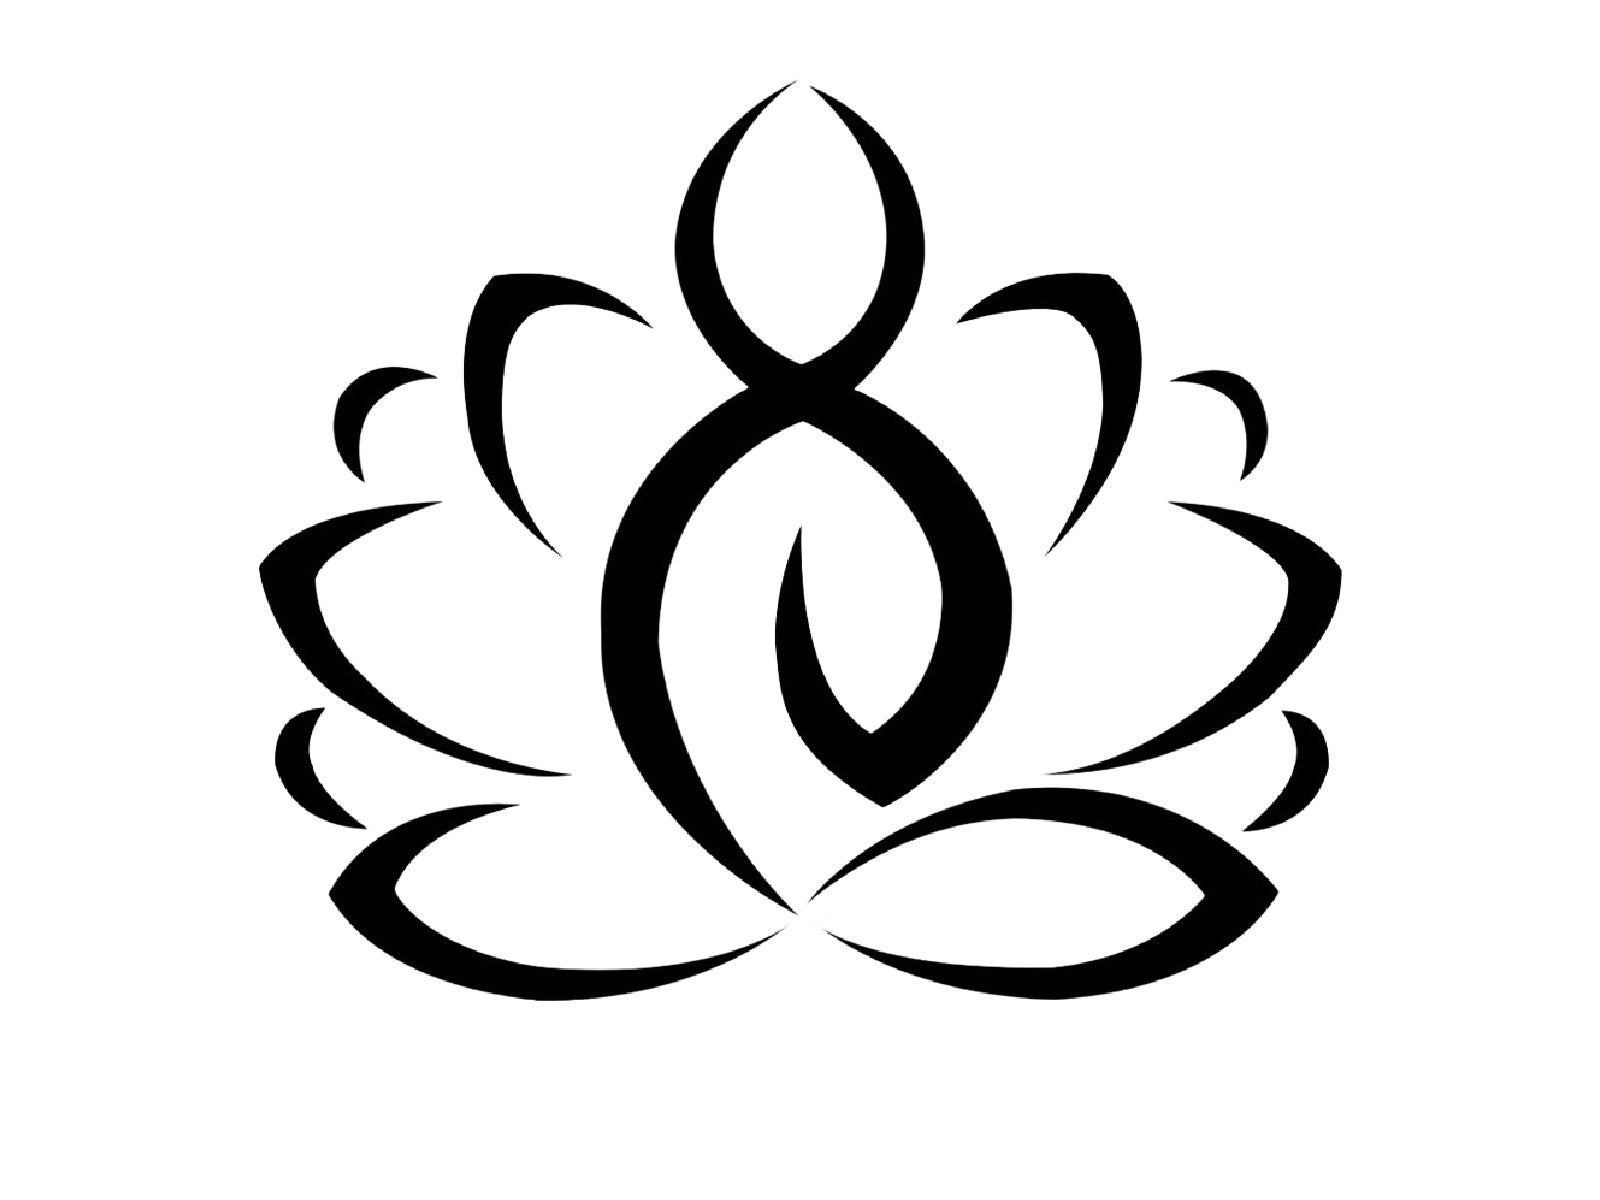 Lotus and Zen Image